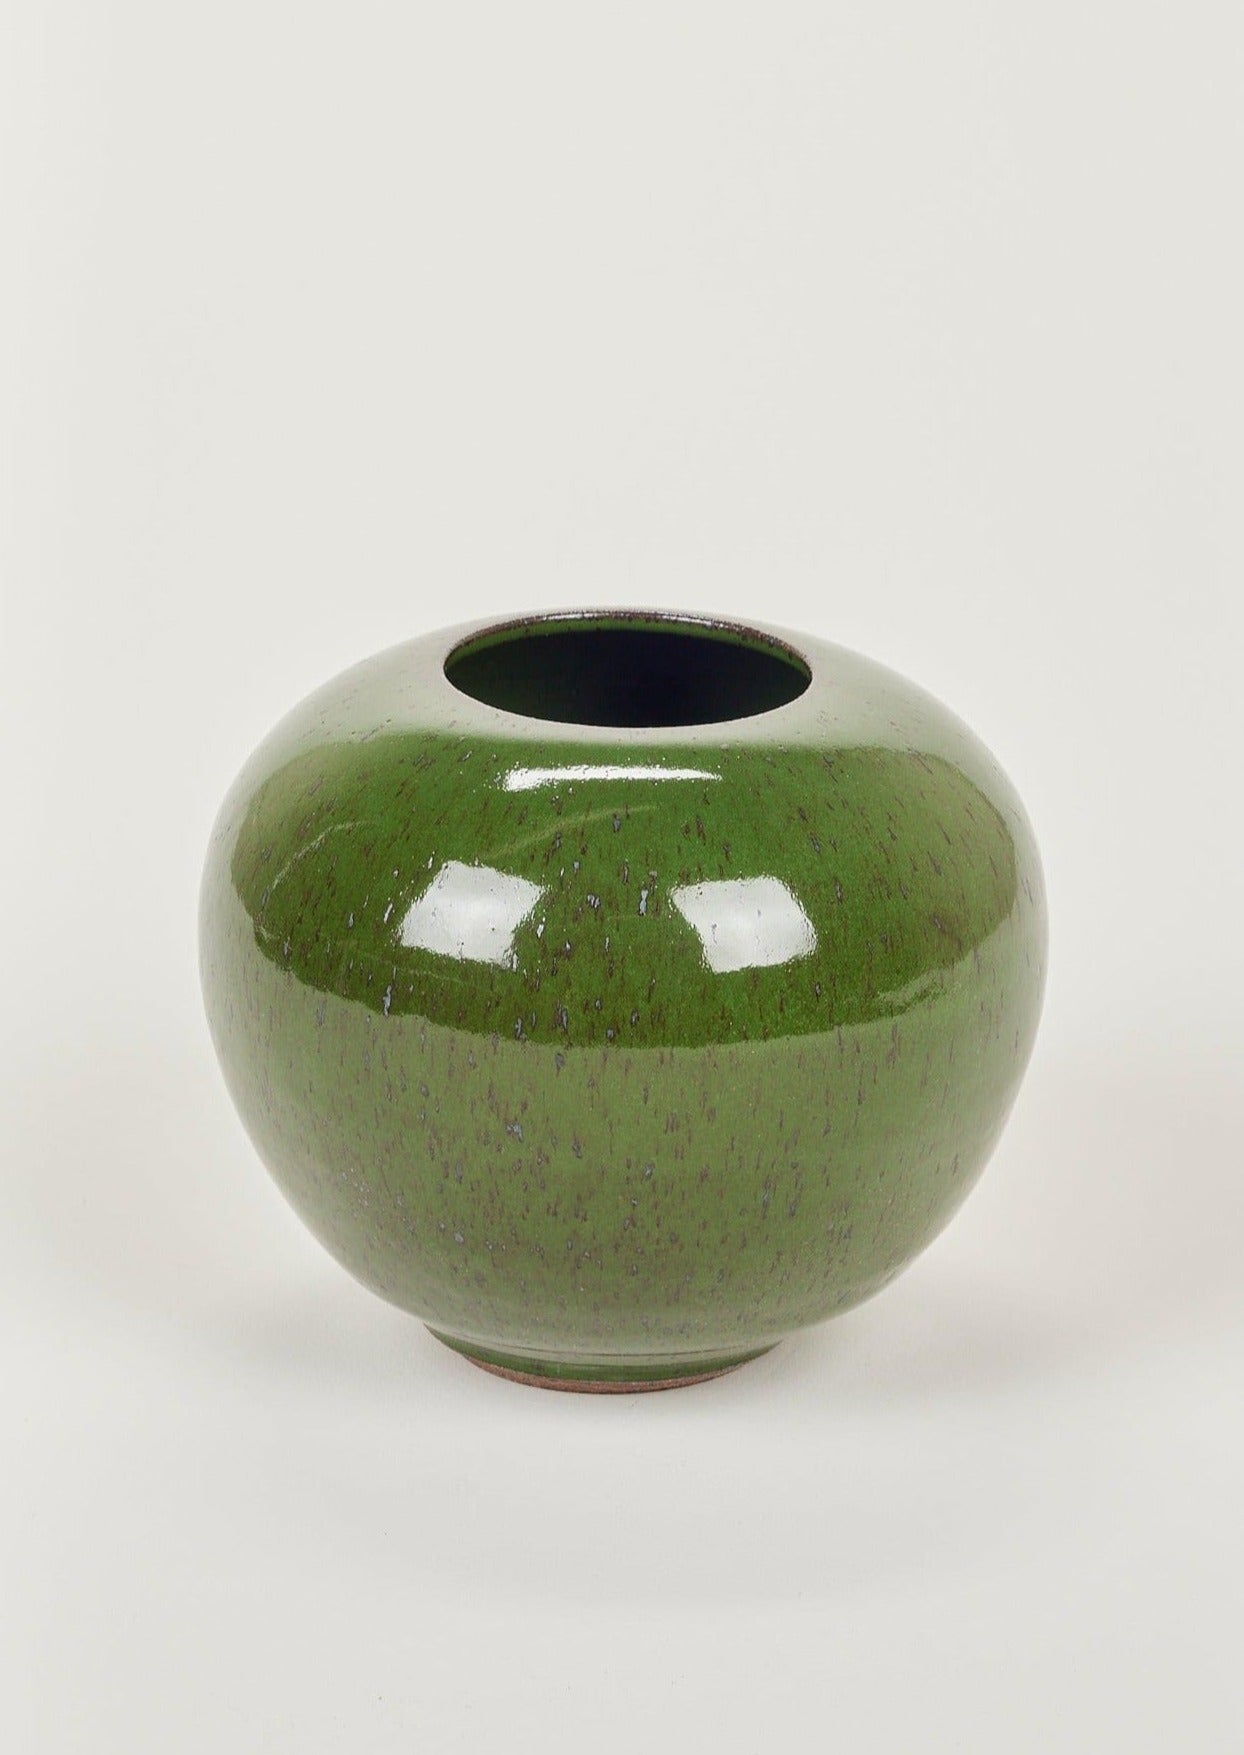 Handmade Clay Vases Rose Bowl Vase in Green Glaze at Afloral 